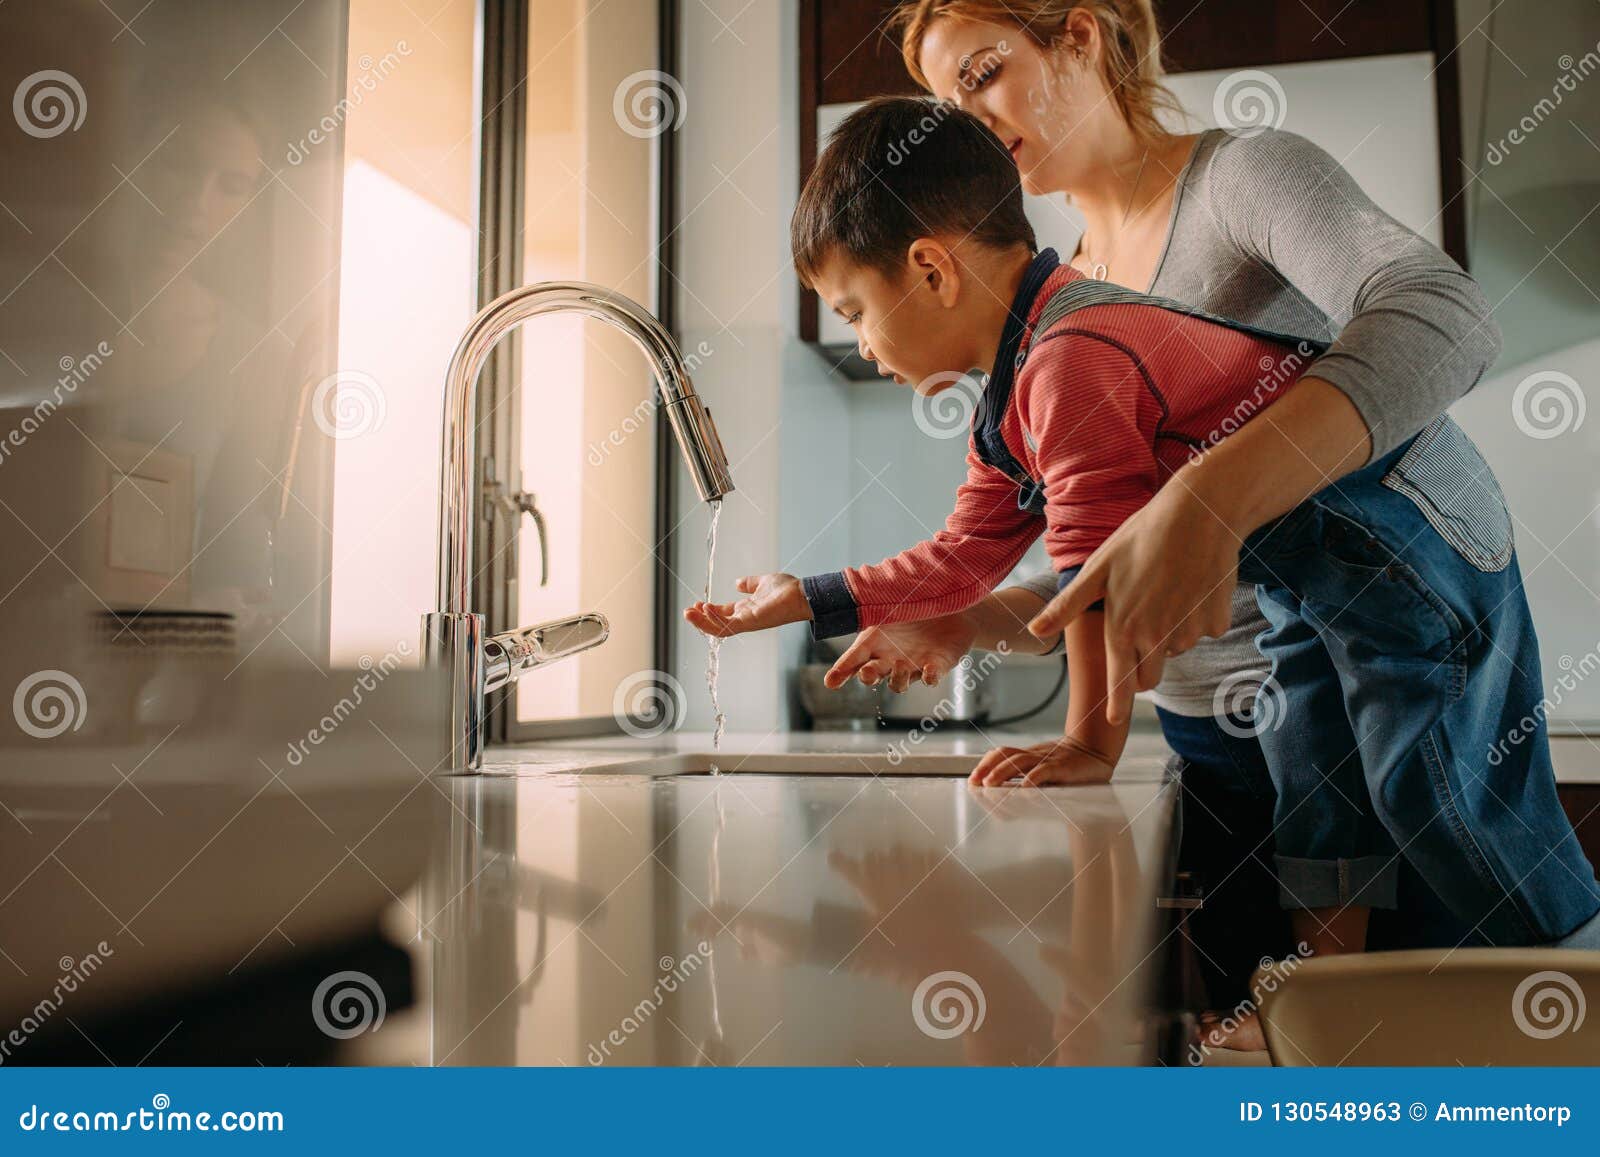 Mom Gets Her Hand Stuck In Sink